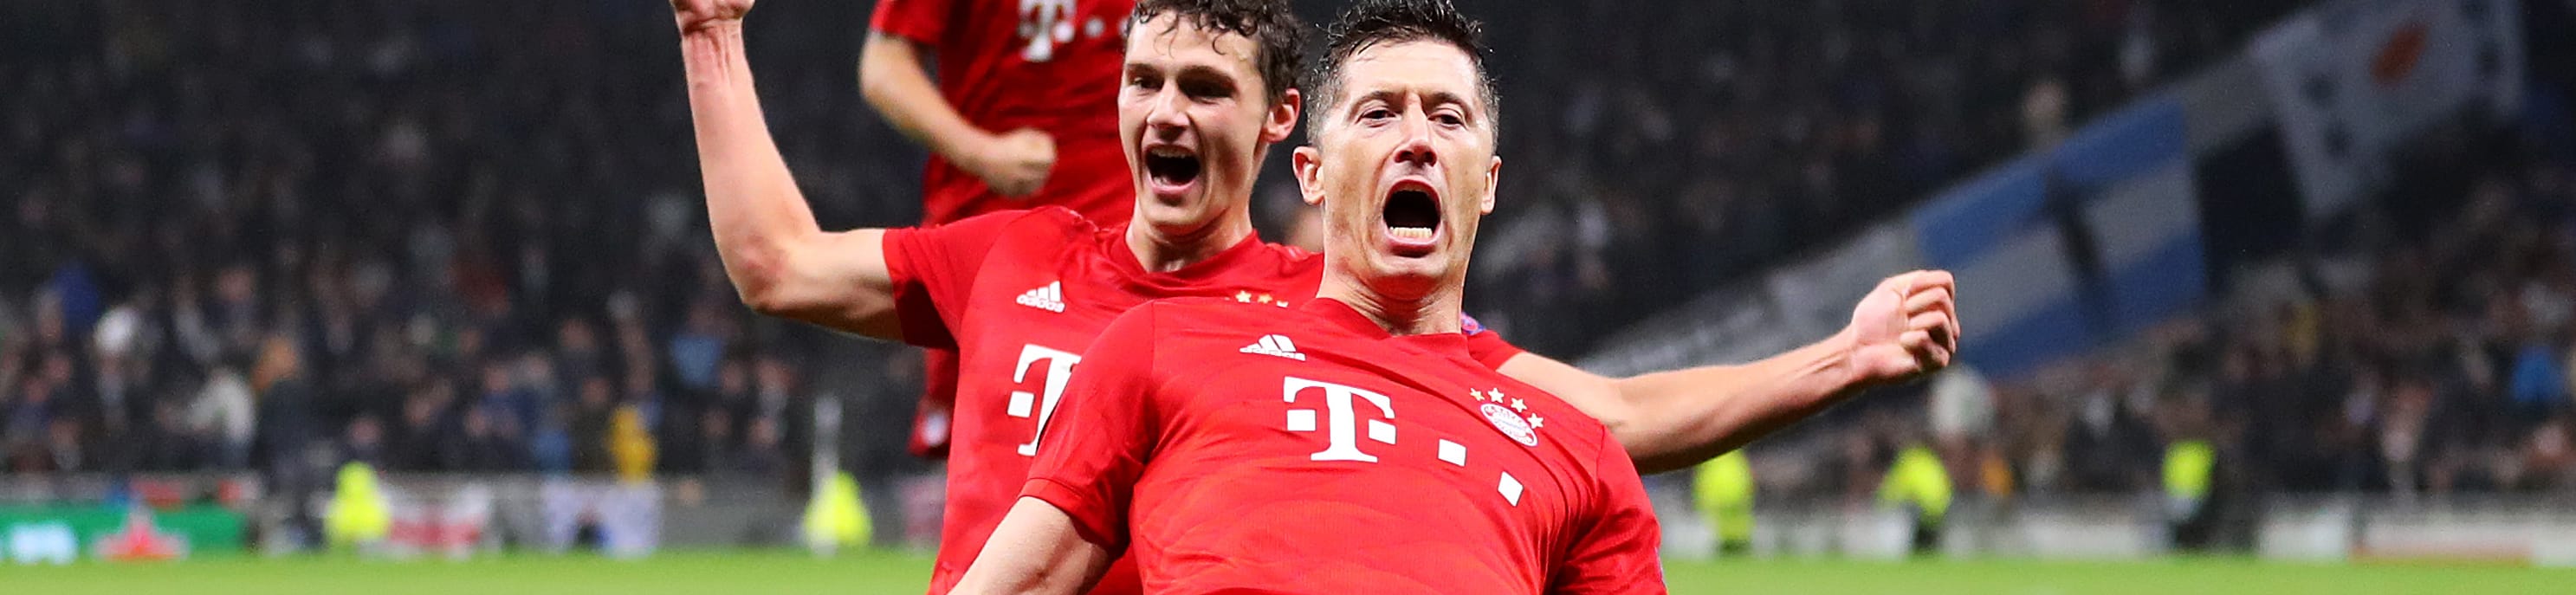 Augsburg-Bayern Monaco: super-Lewa per riprendersi la vetta